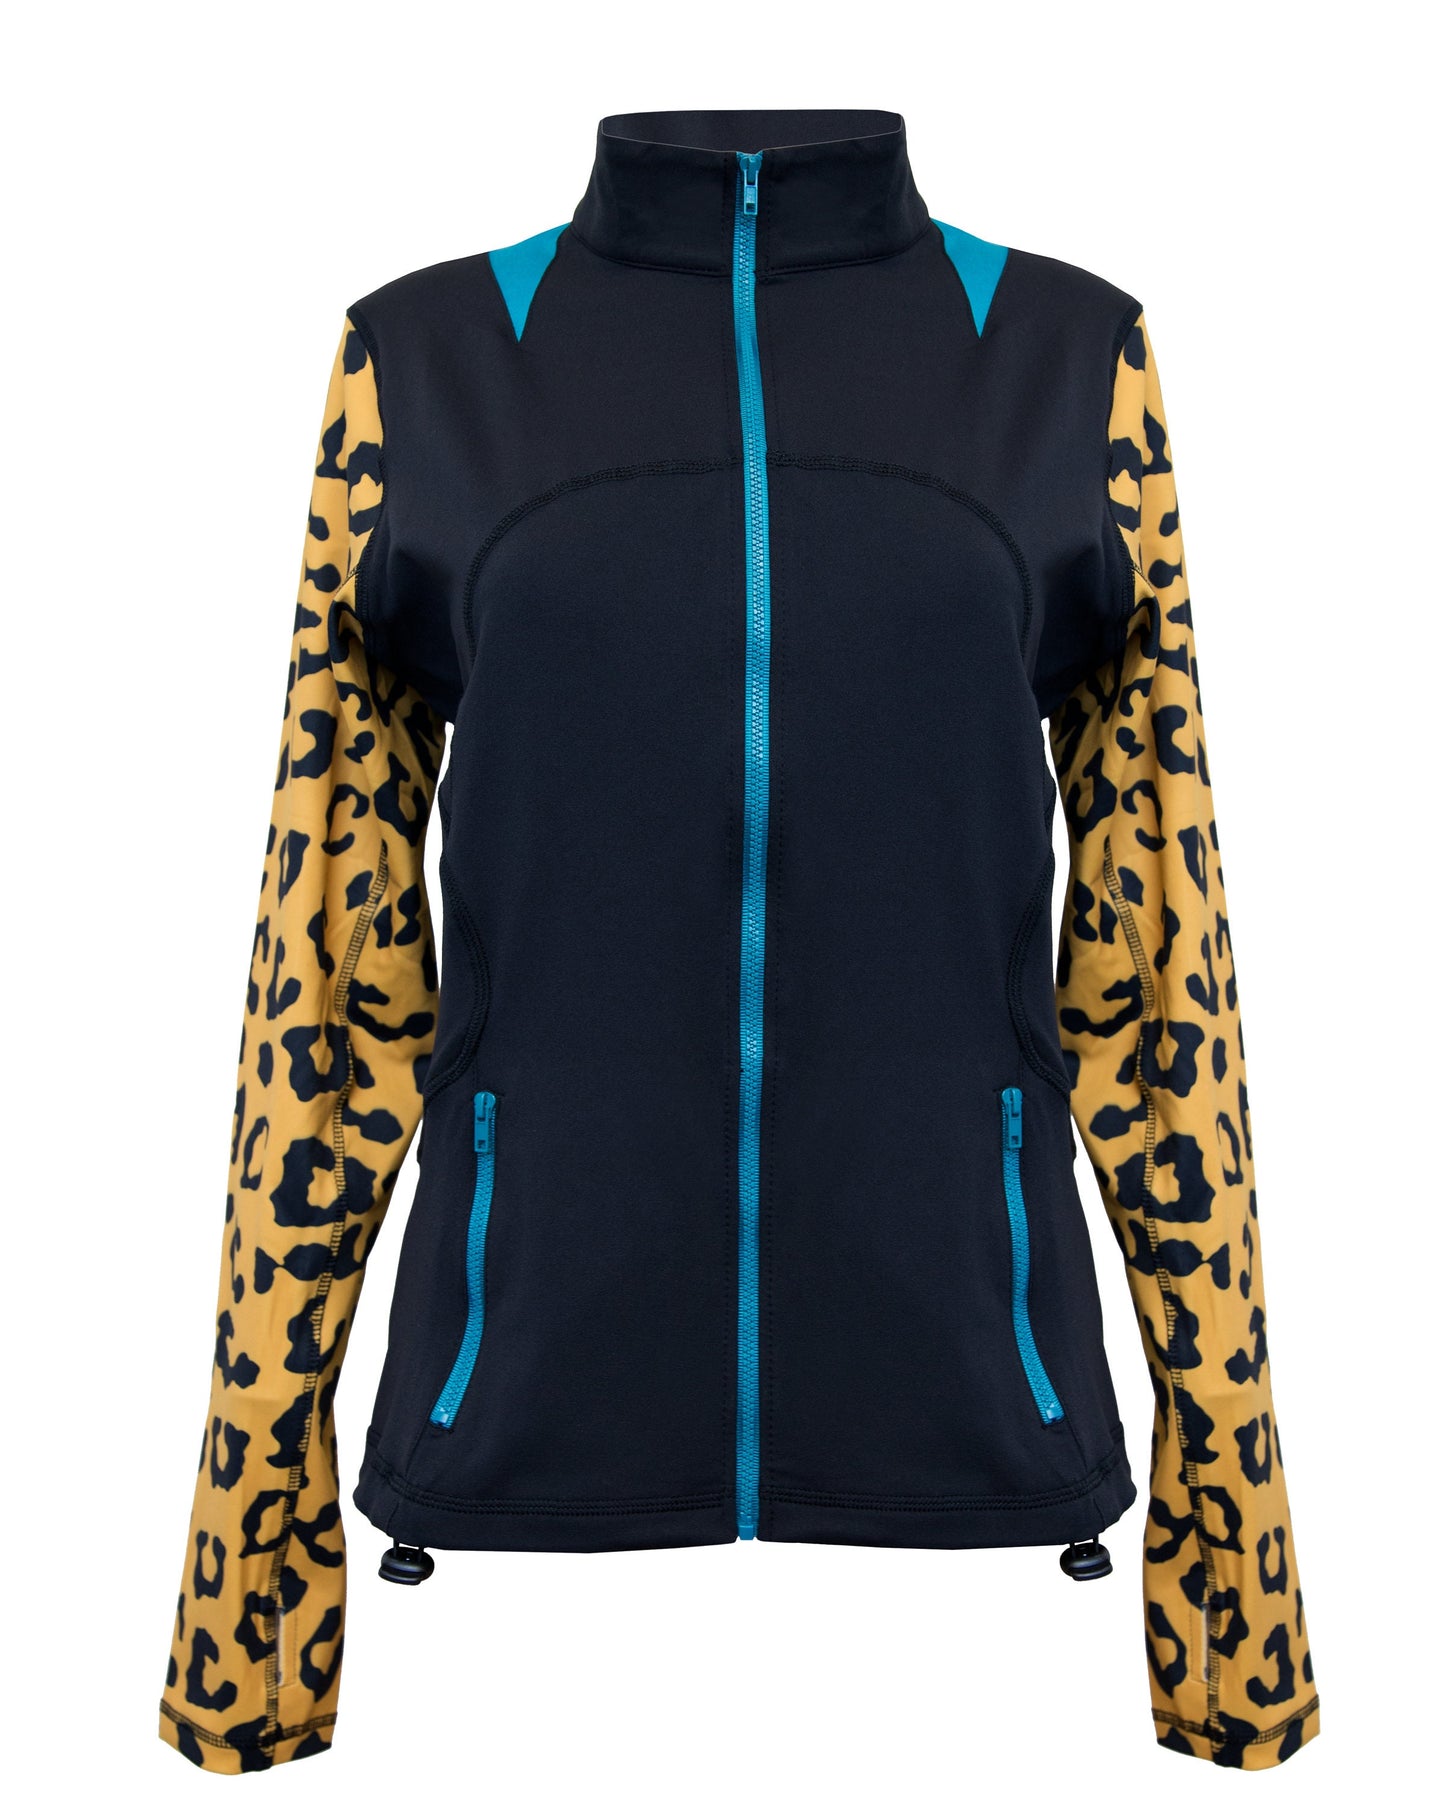 Leopard Print Women's Yoga Track Jacket